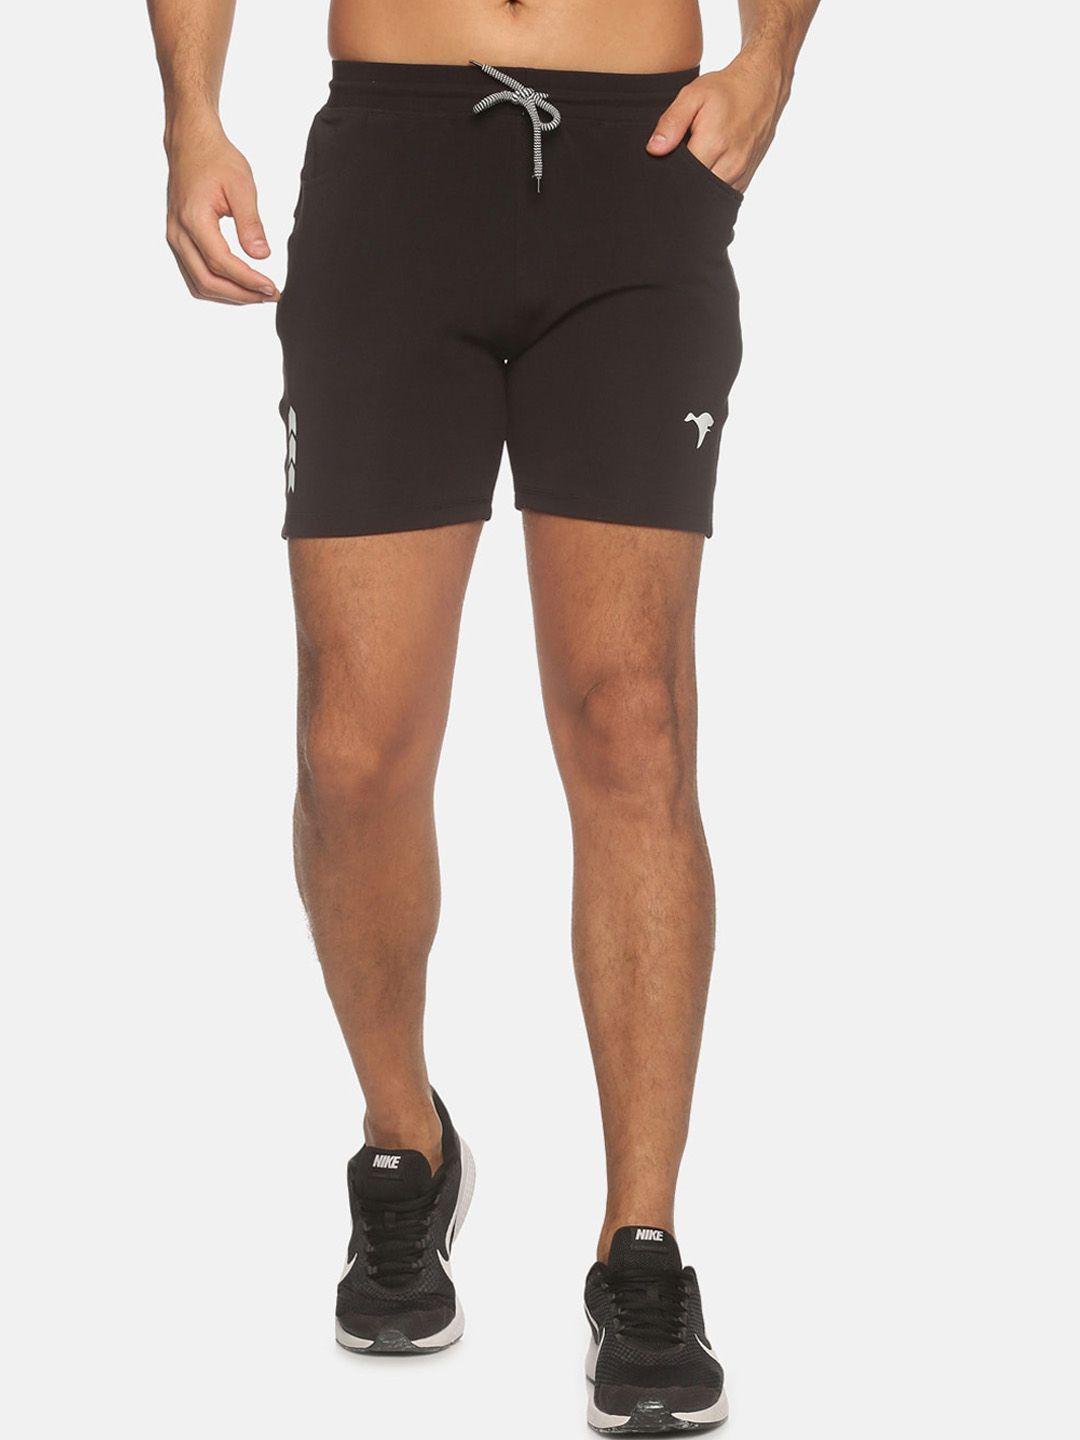 hps-sports-men-black-running-sports-shorts